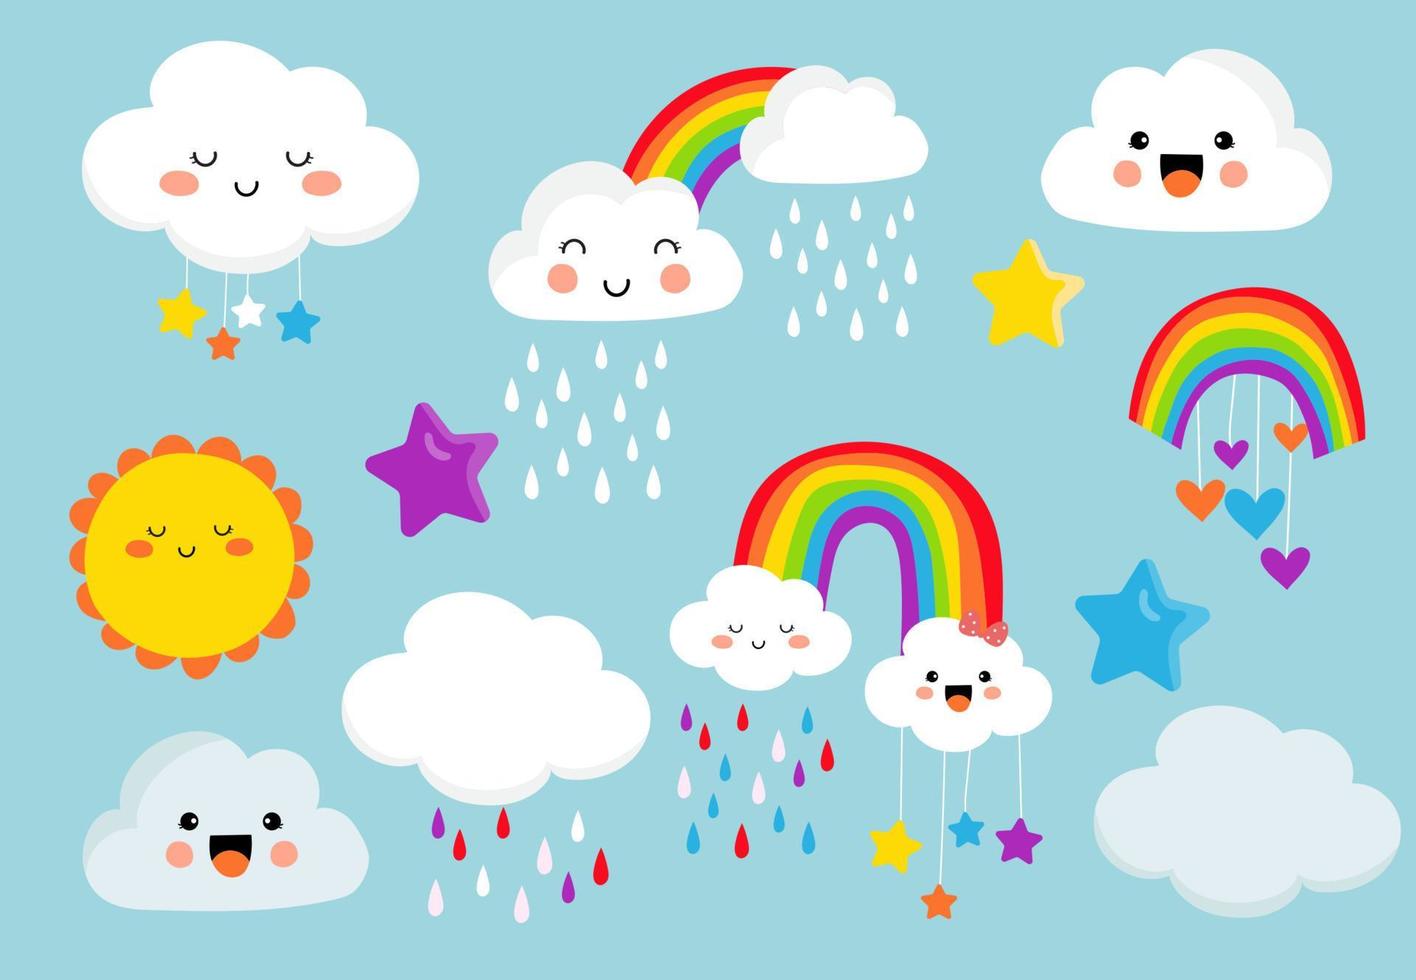 vivid rainbow set with cloud,sun,star,heart illustration for sticker,postcard,birthday invitation.Editable element vector